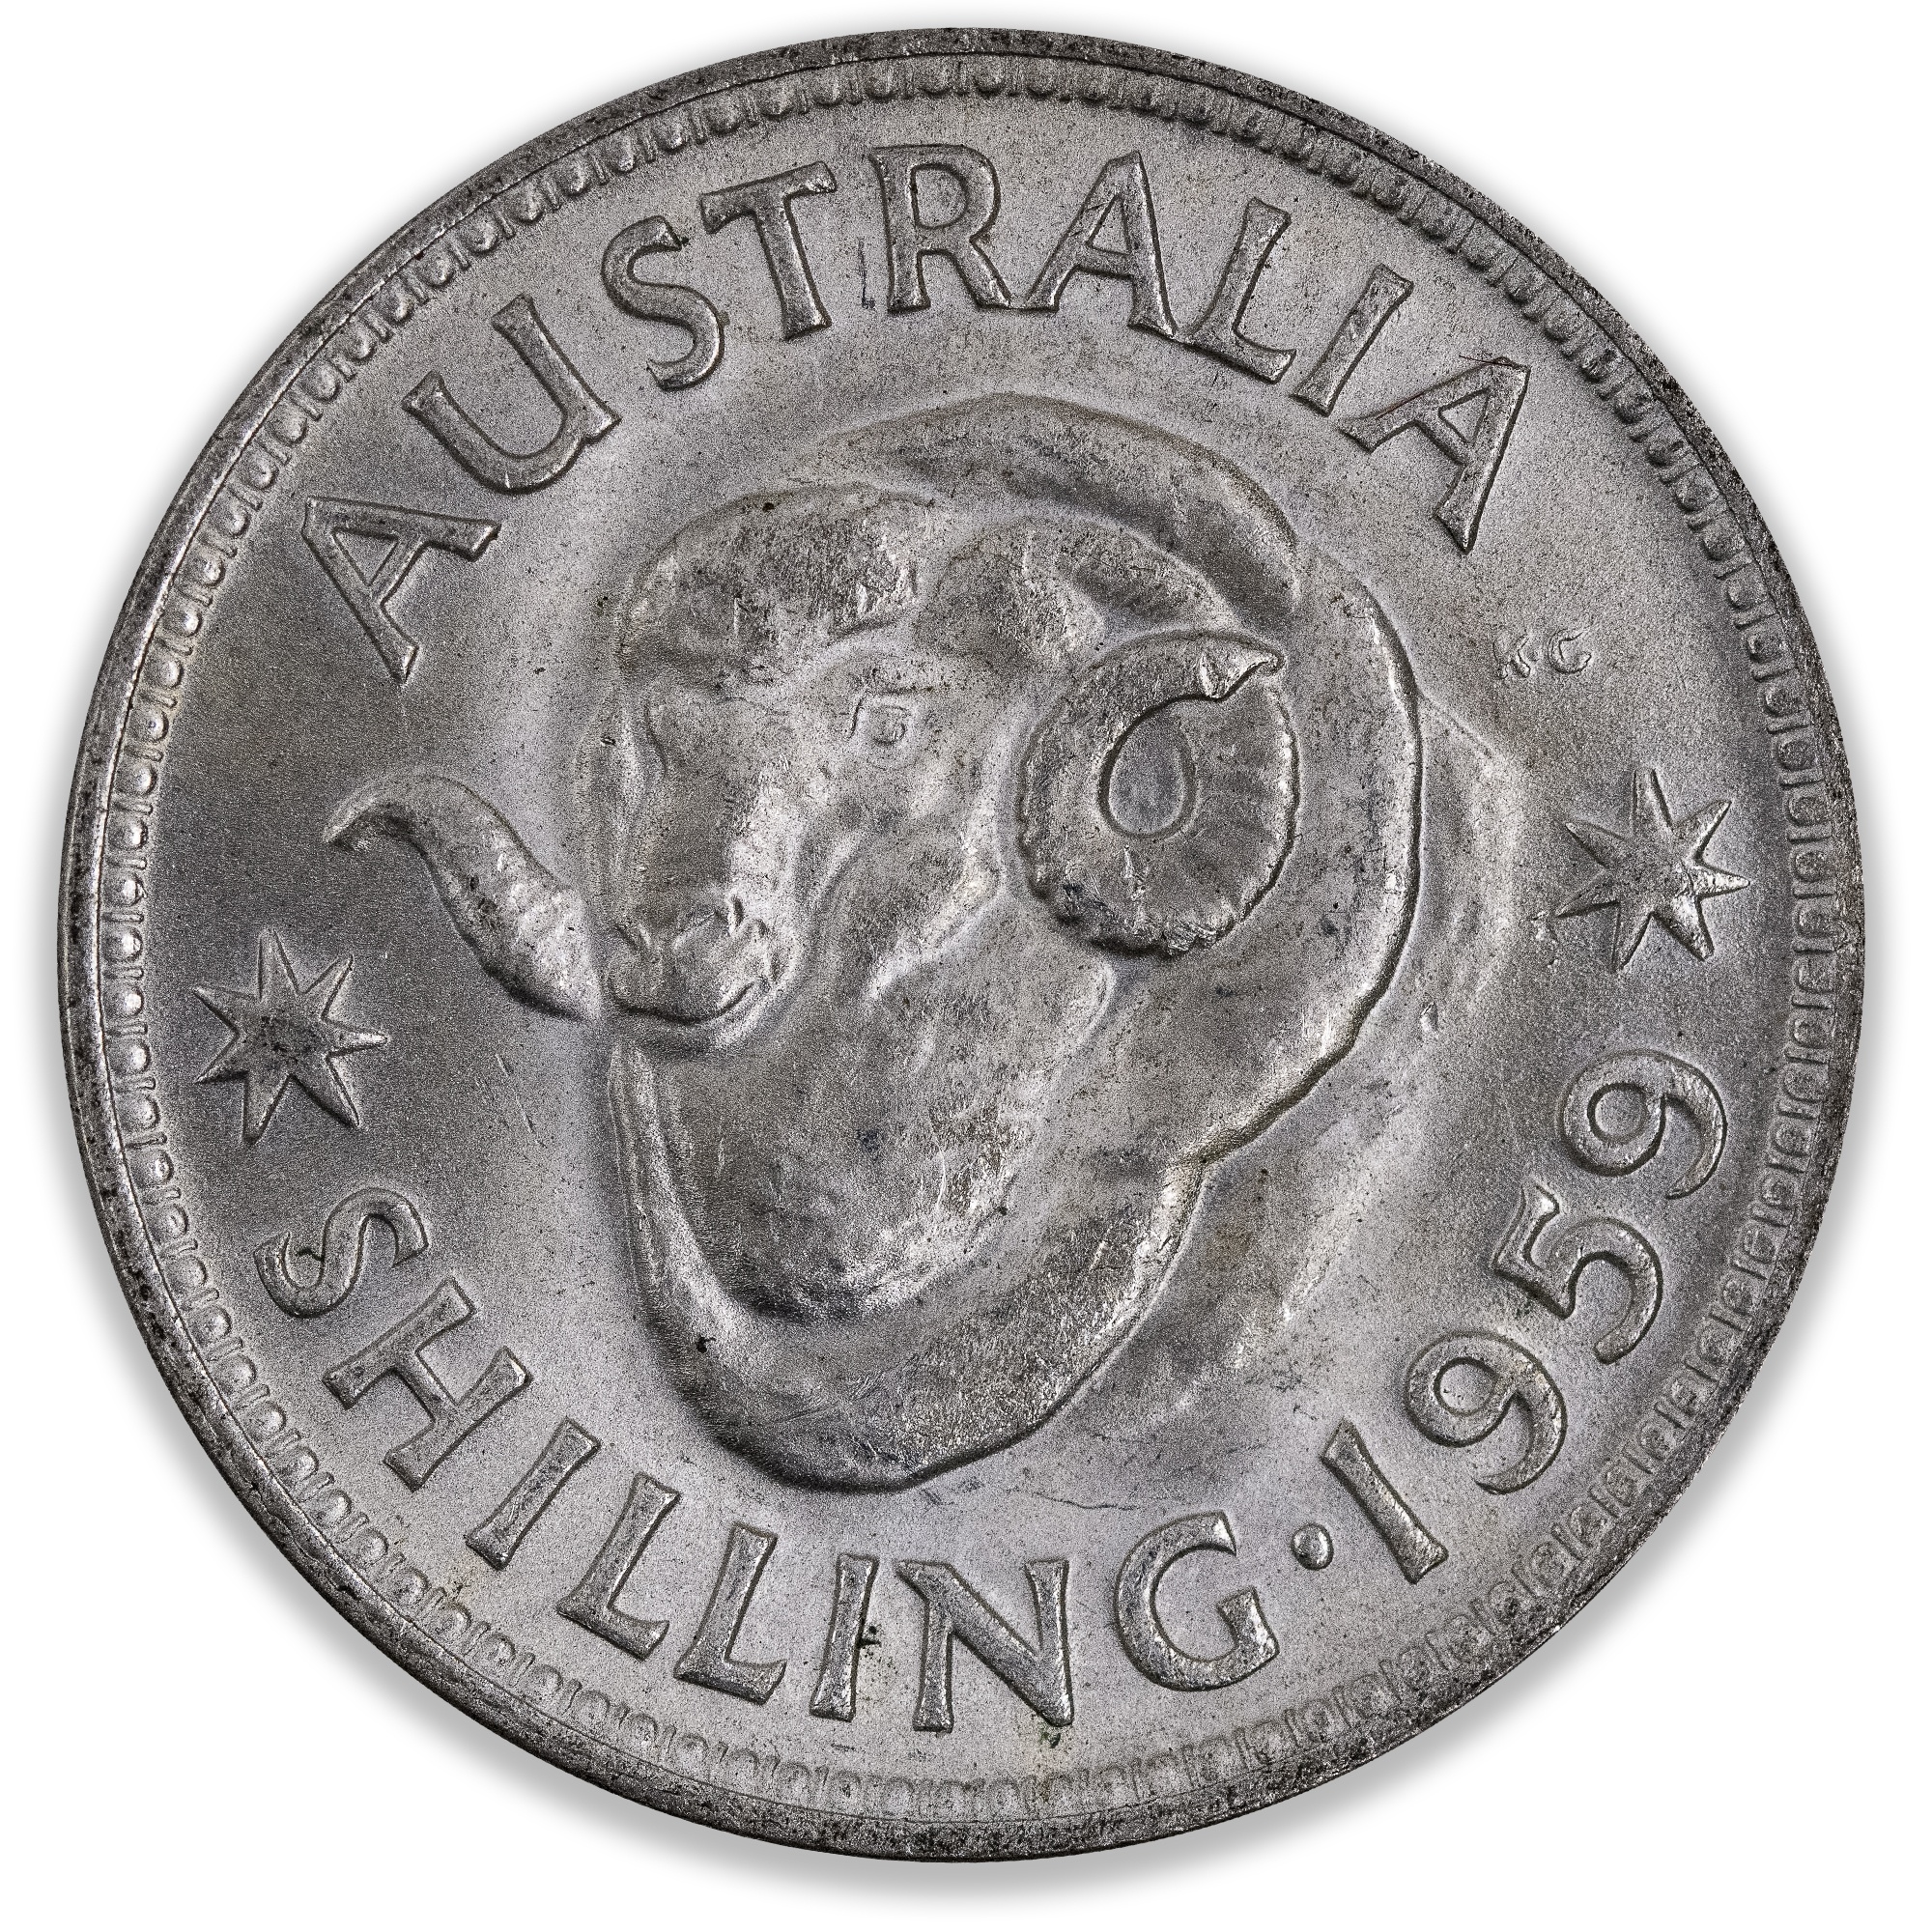 1959 Australian Shilling Choice Uncirculated